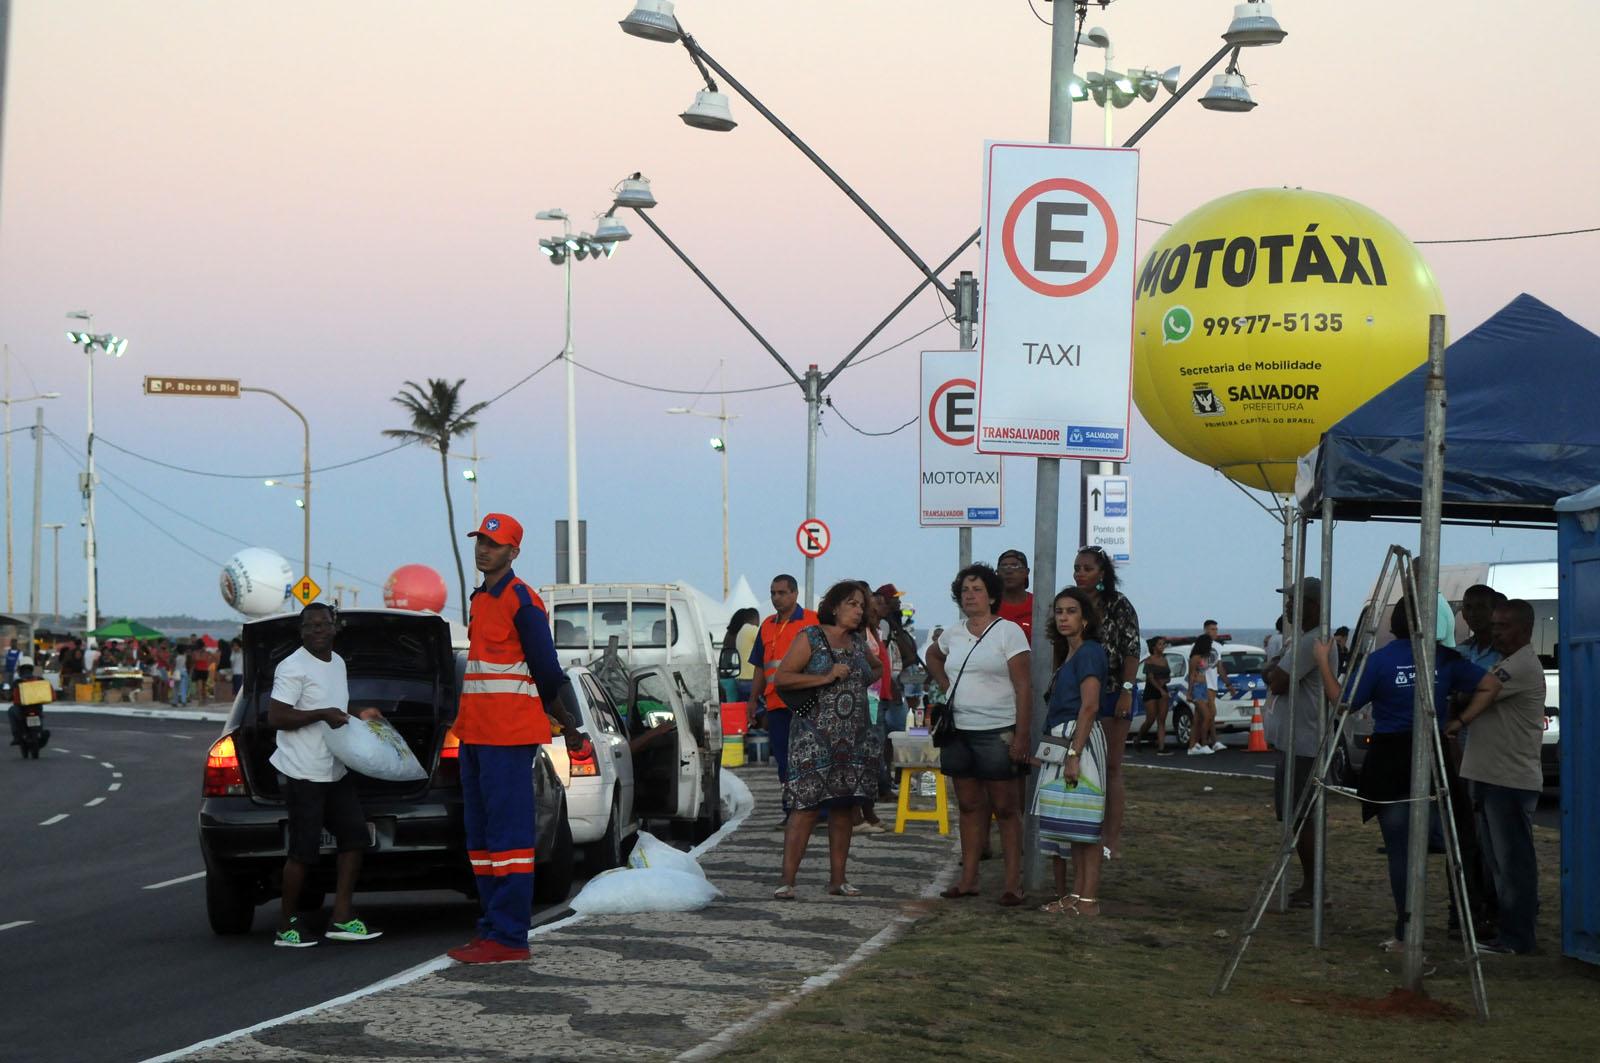 Semob monta pontos especiais de táxi e mototáxi durante o Carnaval